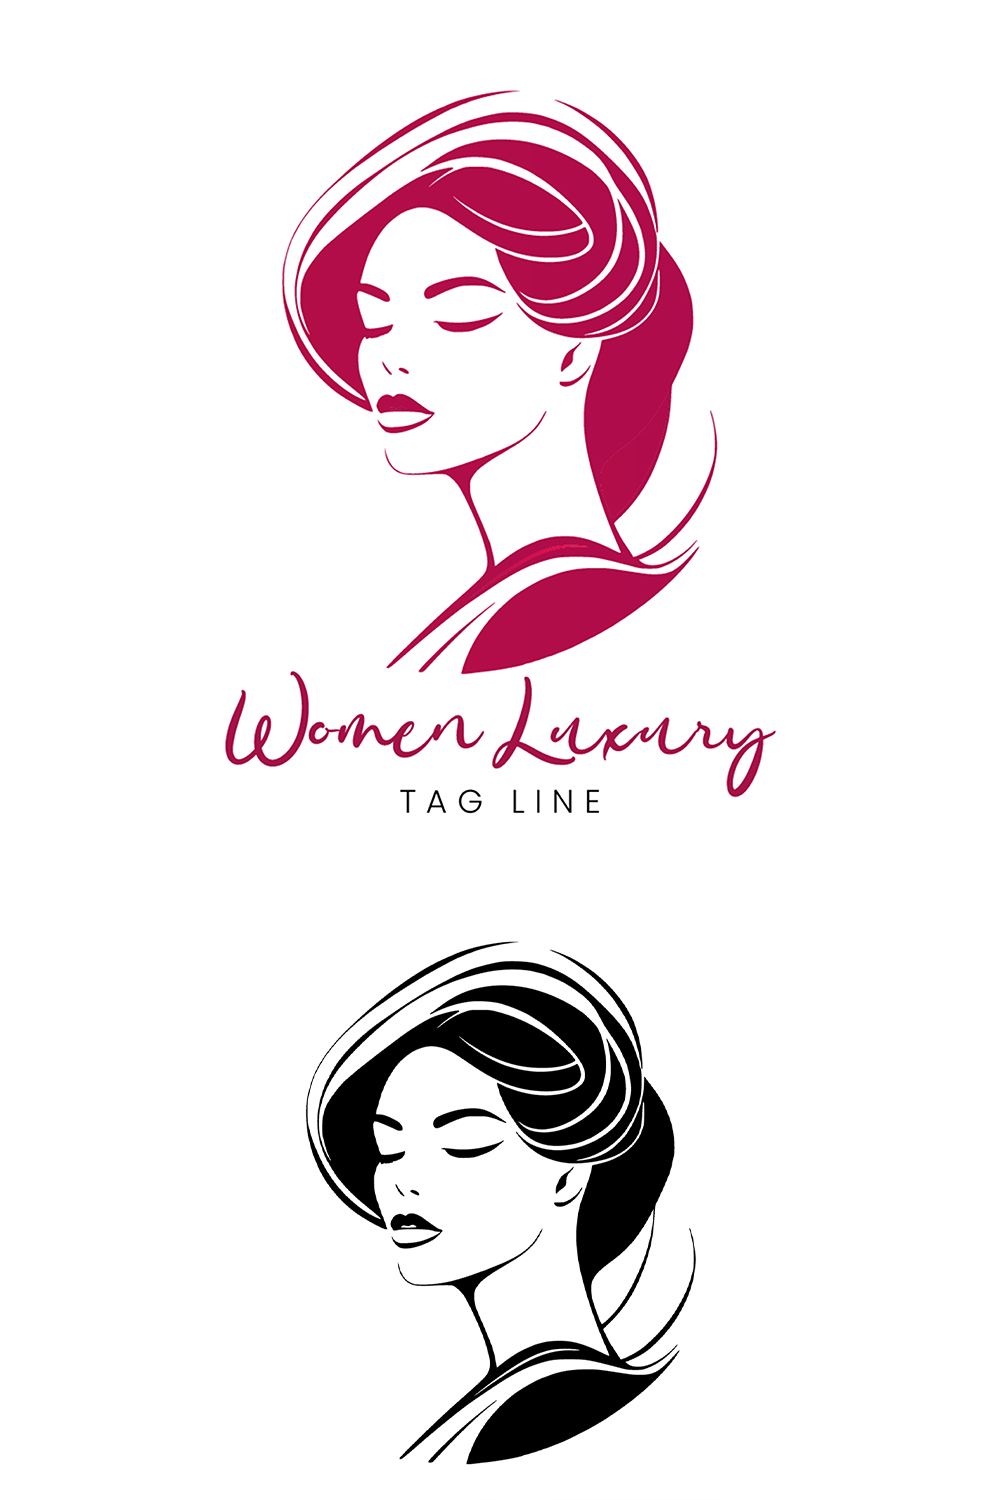 Women beauty logo pinterest preview image.